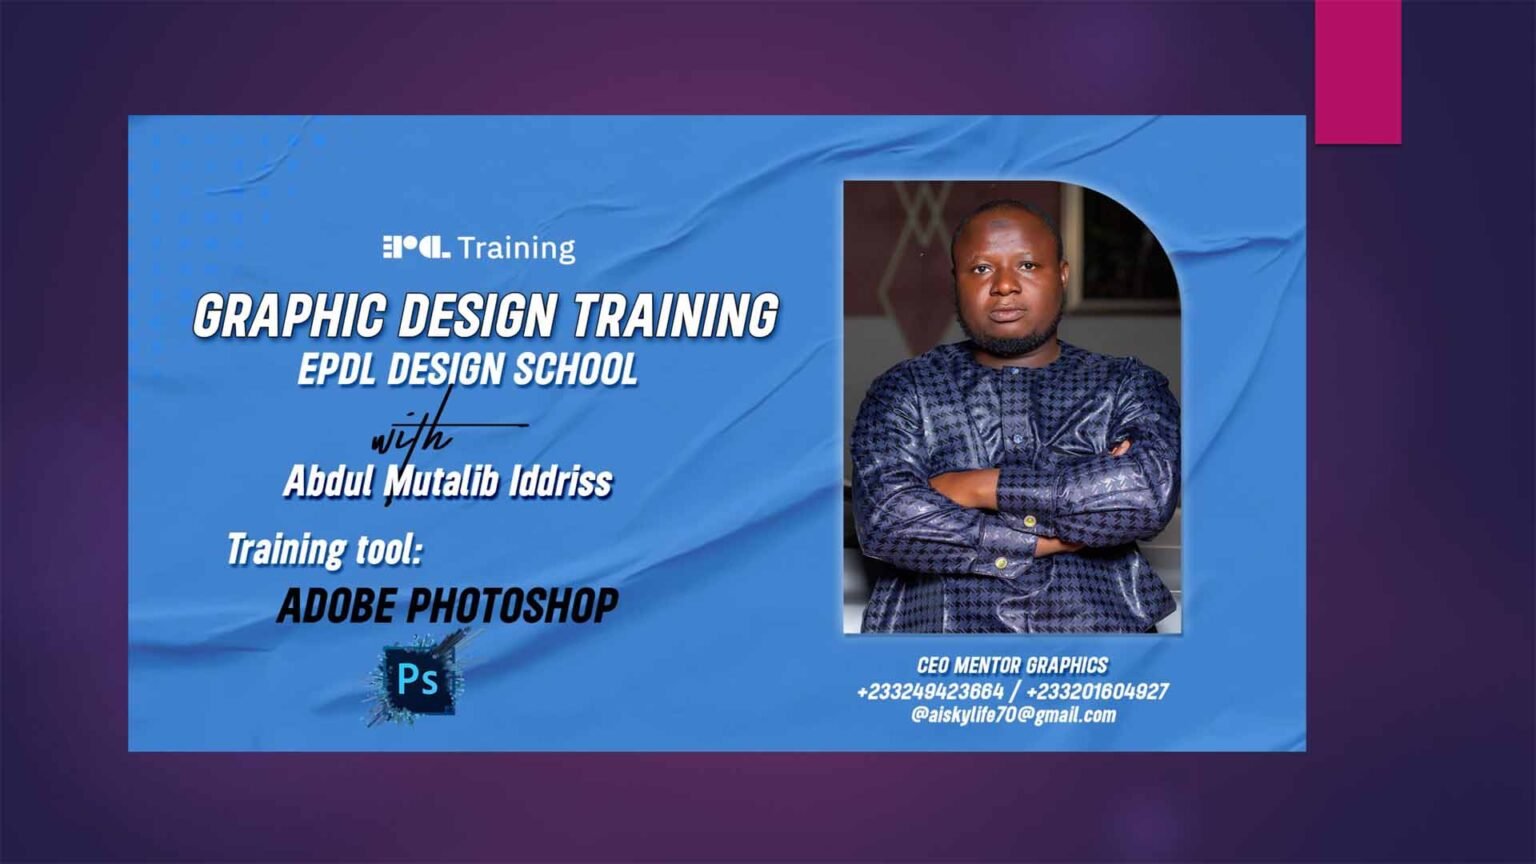 Graphic Design Training with Adobe Photoshop